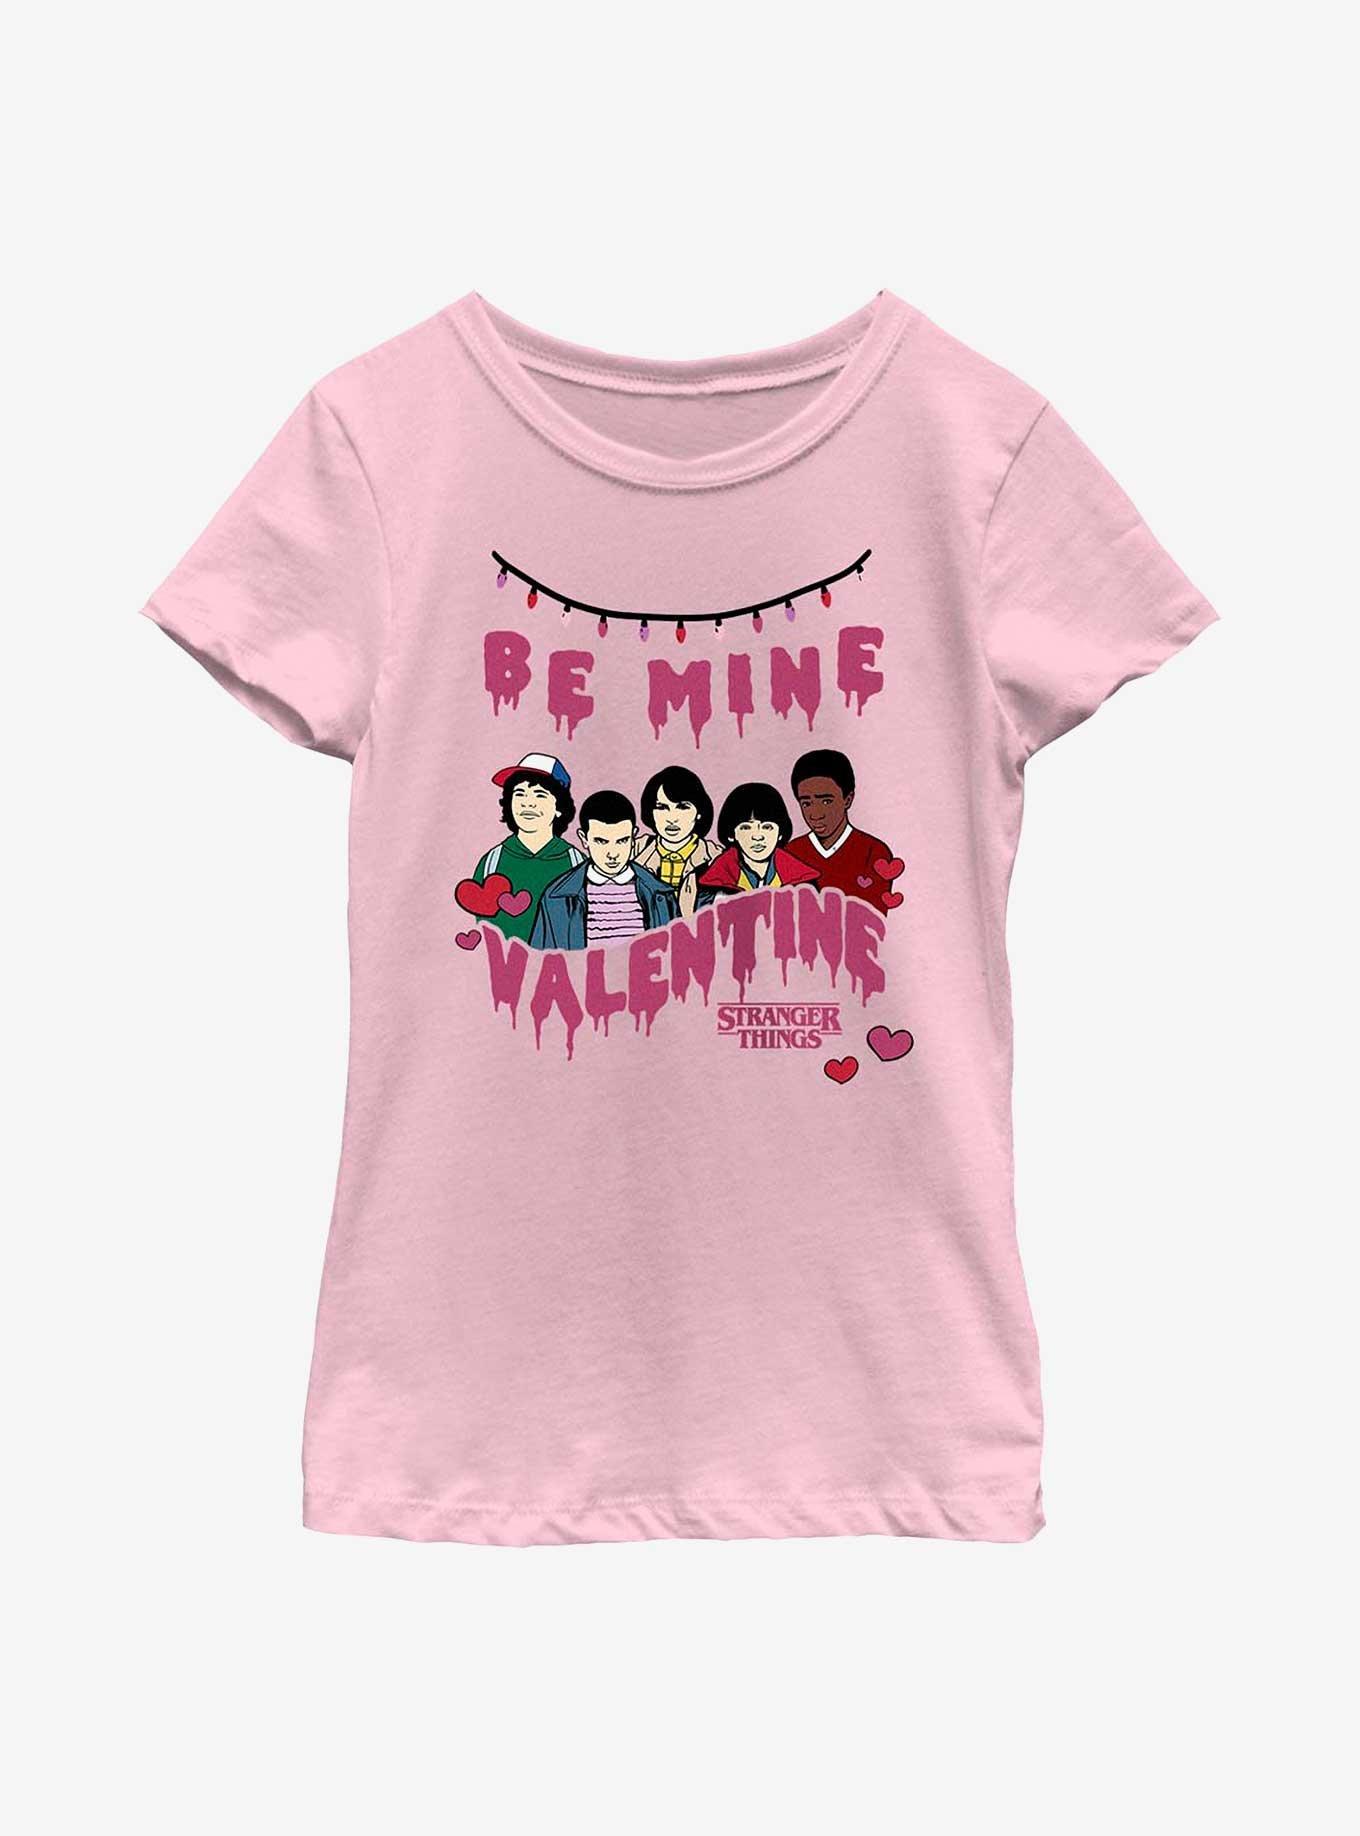 Stranger Things Be Mine Valentine Youth Girls T-Shirt, PINK, hi-res